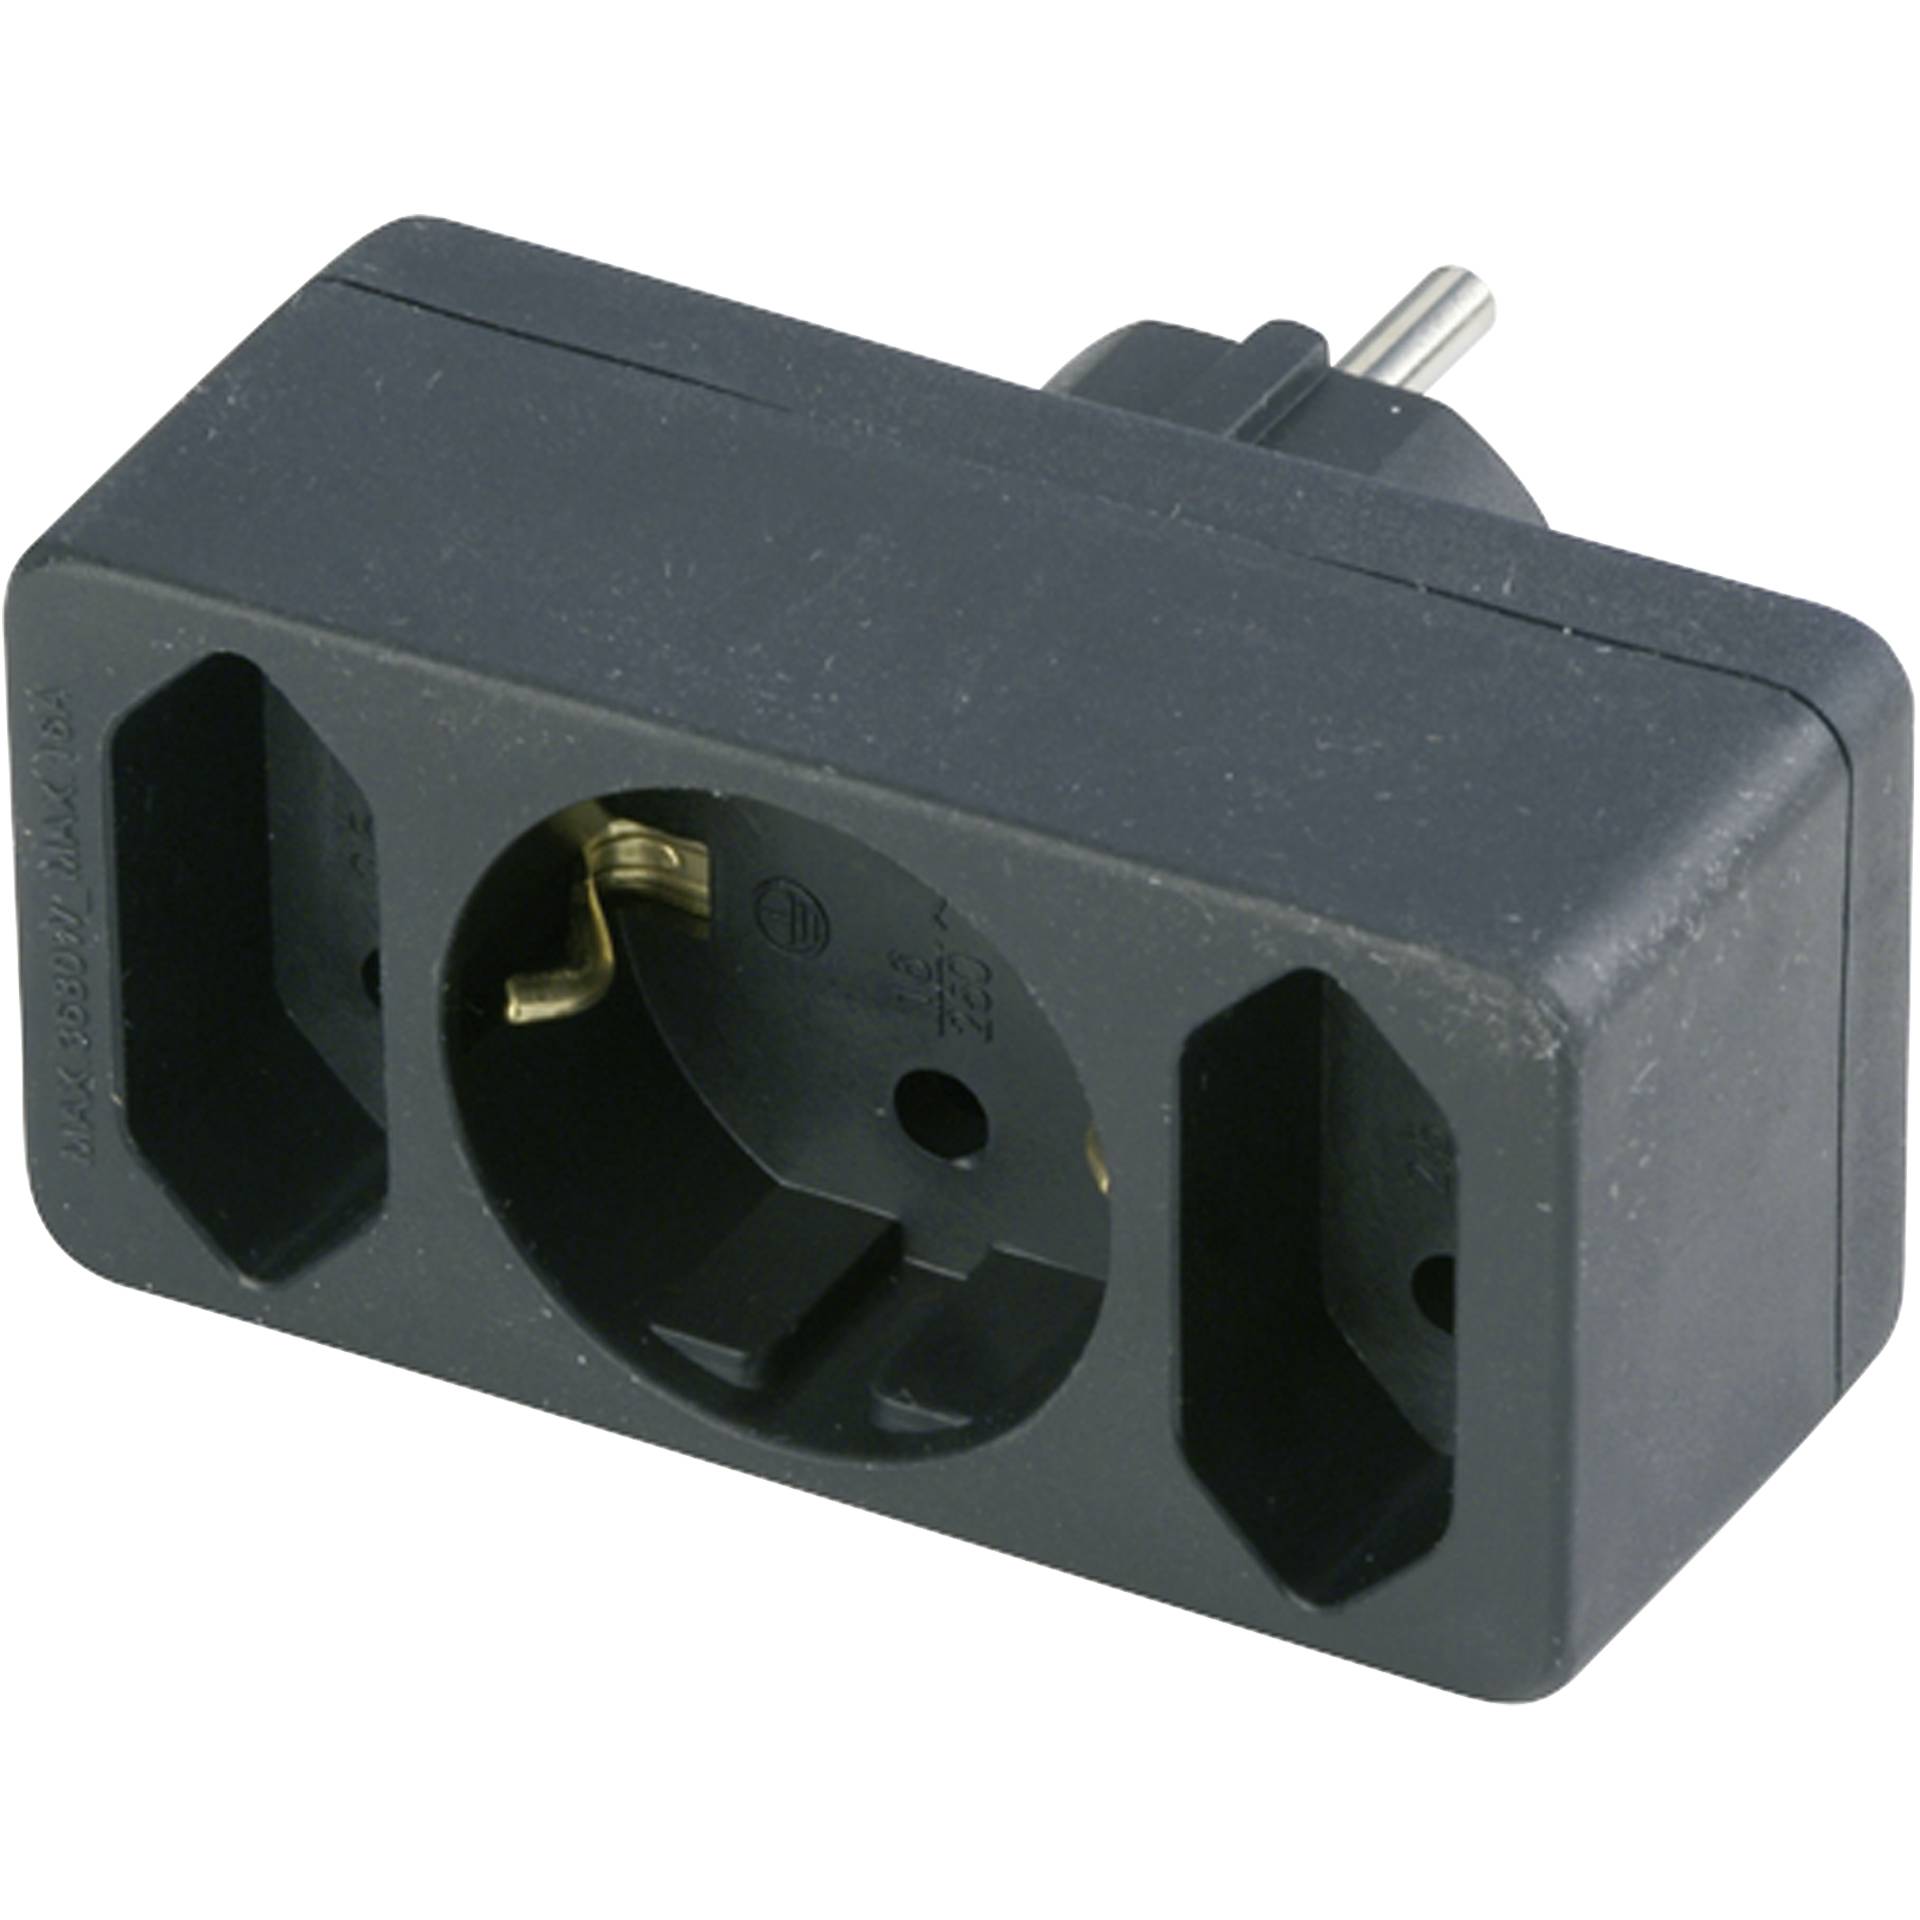 REV transition plug 2-fold + 1 Safety contact black